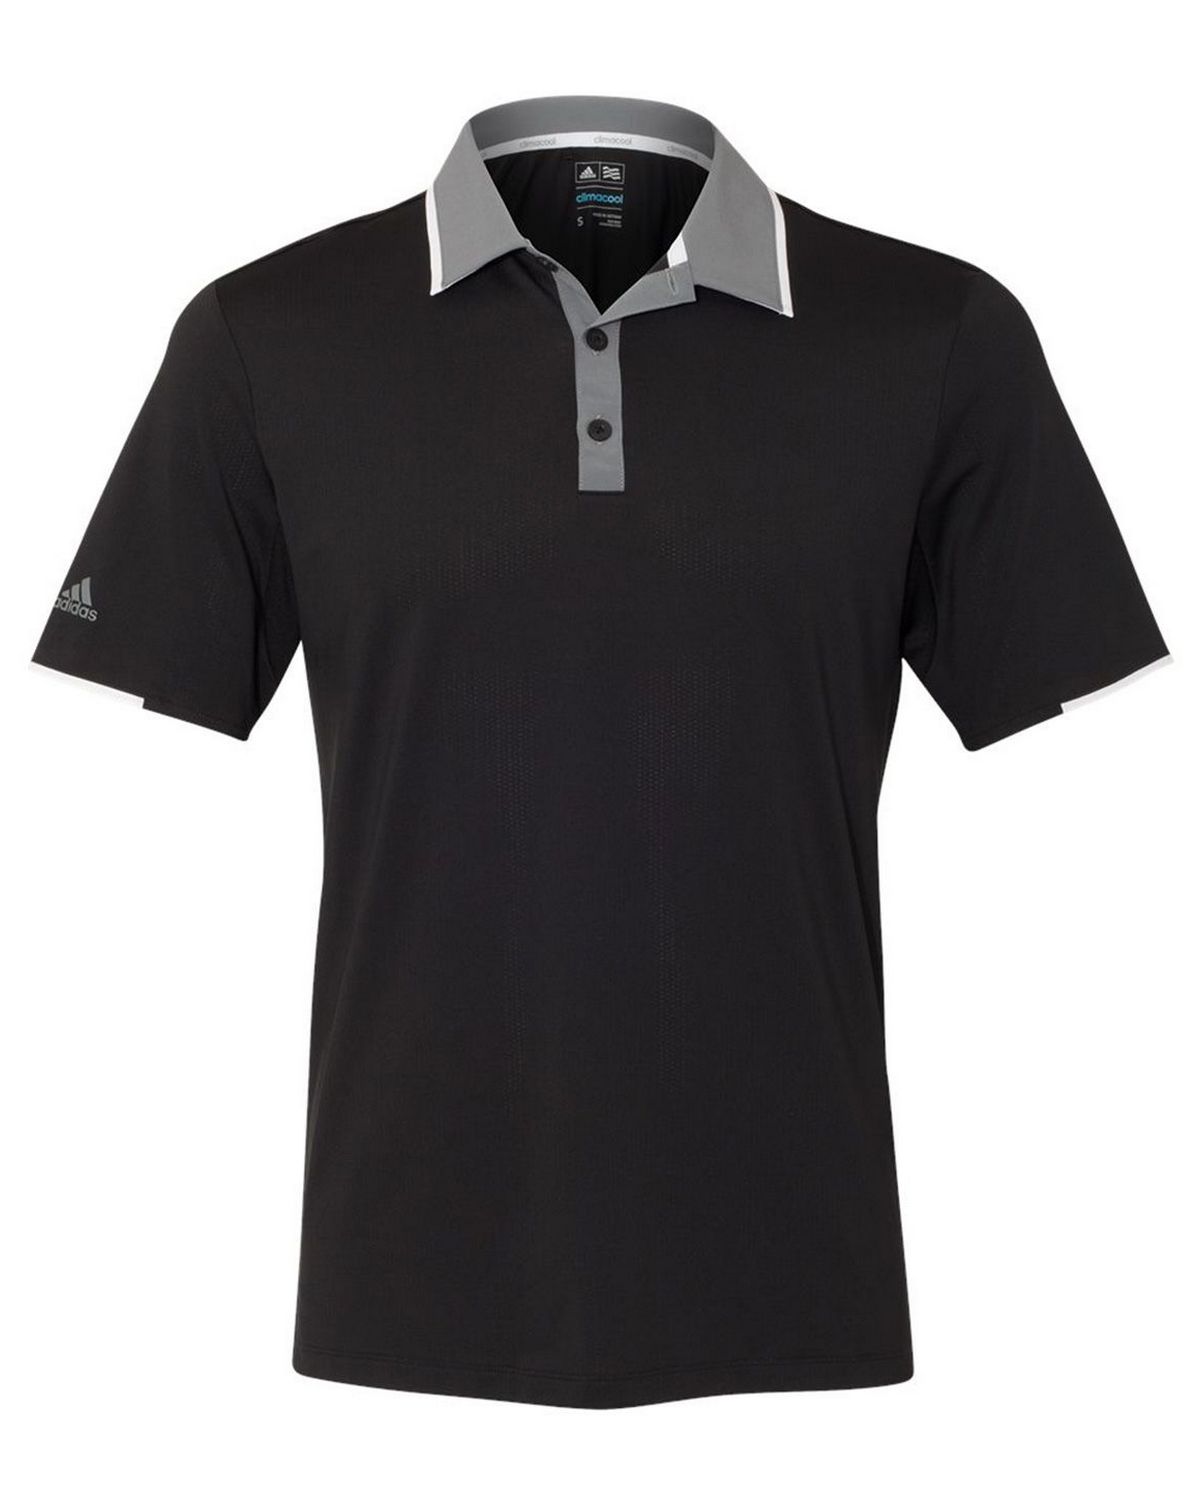 Adidas Golf Polo Sports Shirts 